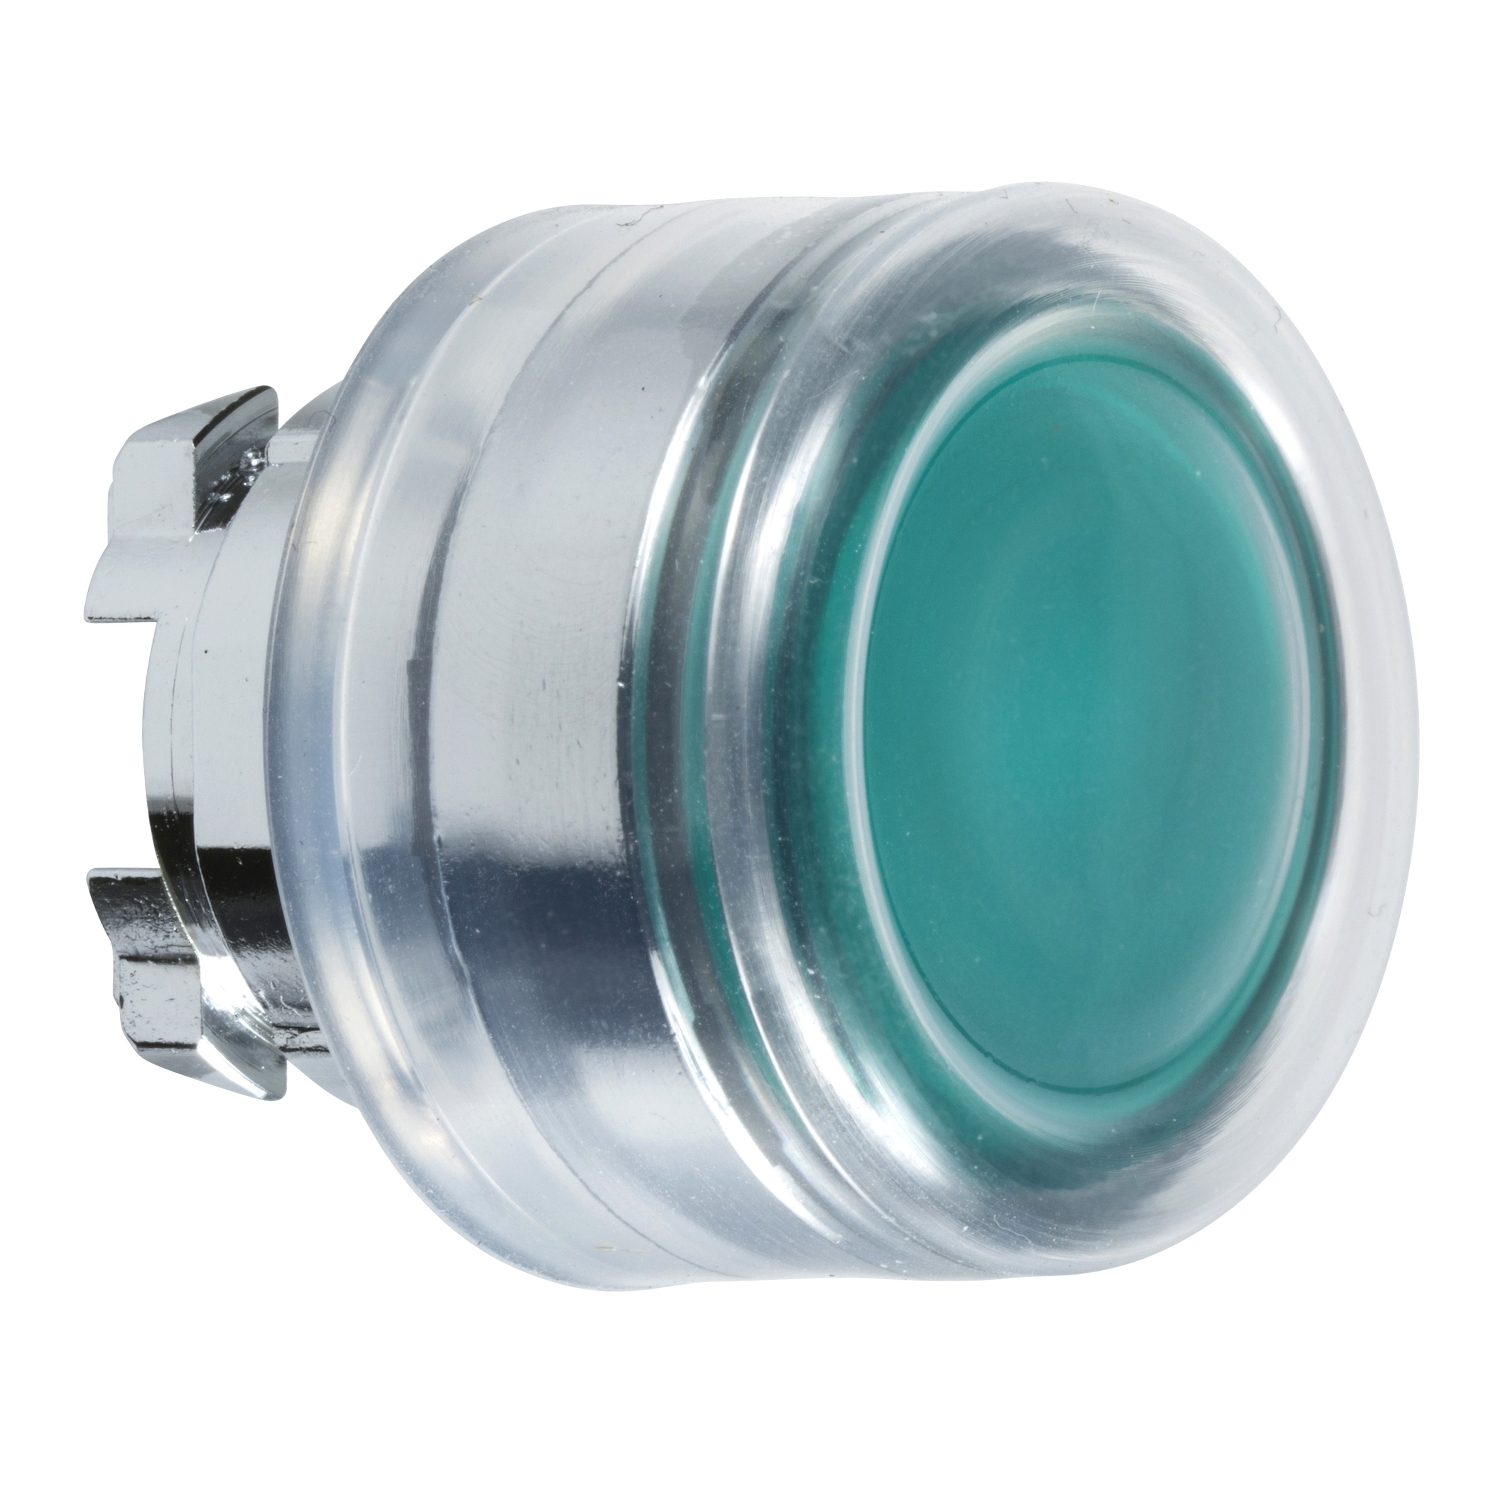 Head for illuminated push button, Harmony XB4, metal, green flush, 22mm, universal LED, spring return, clear boot